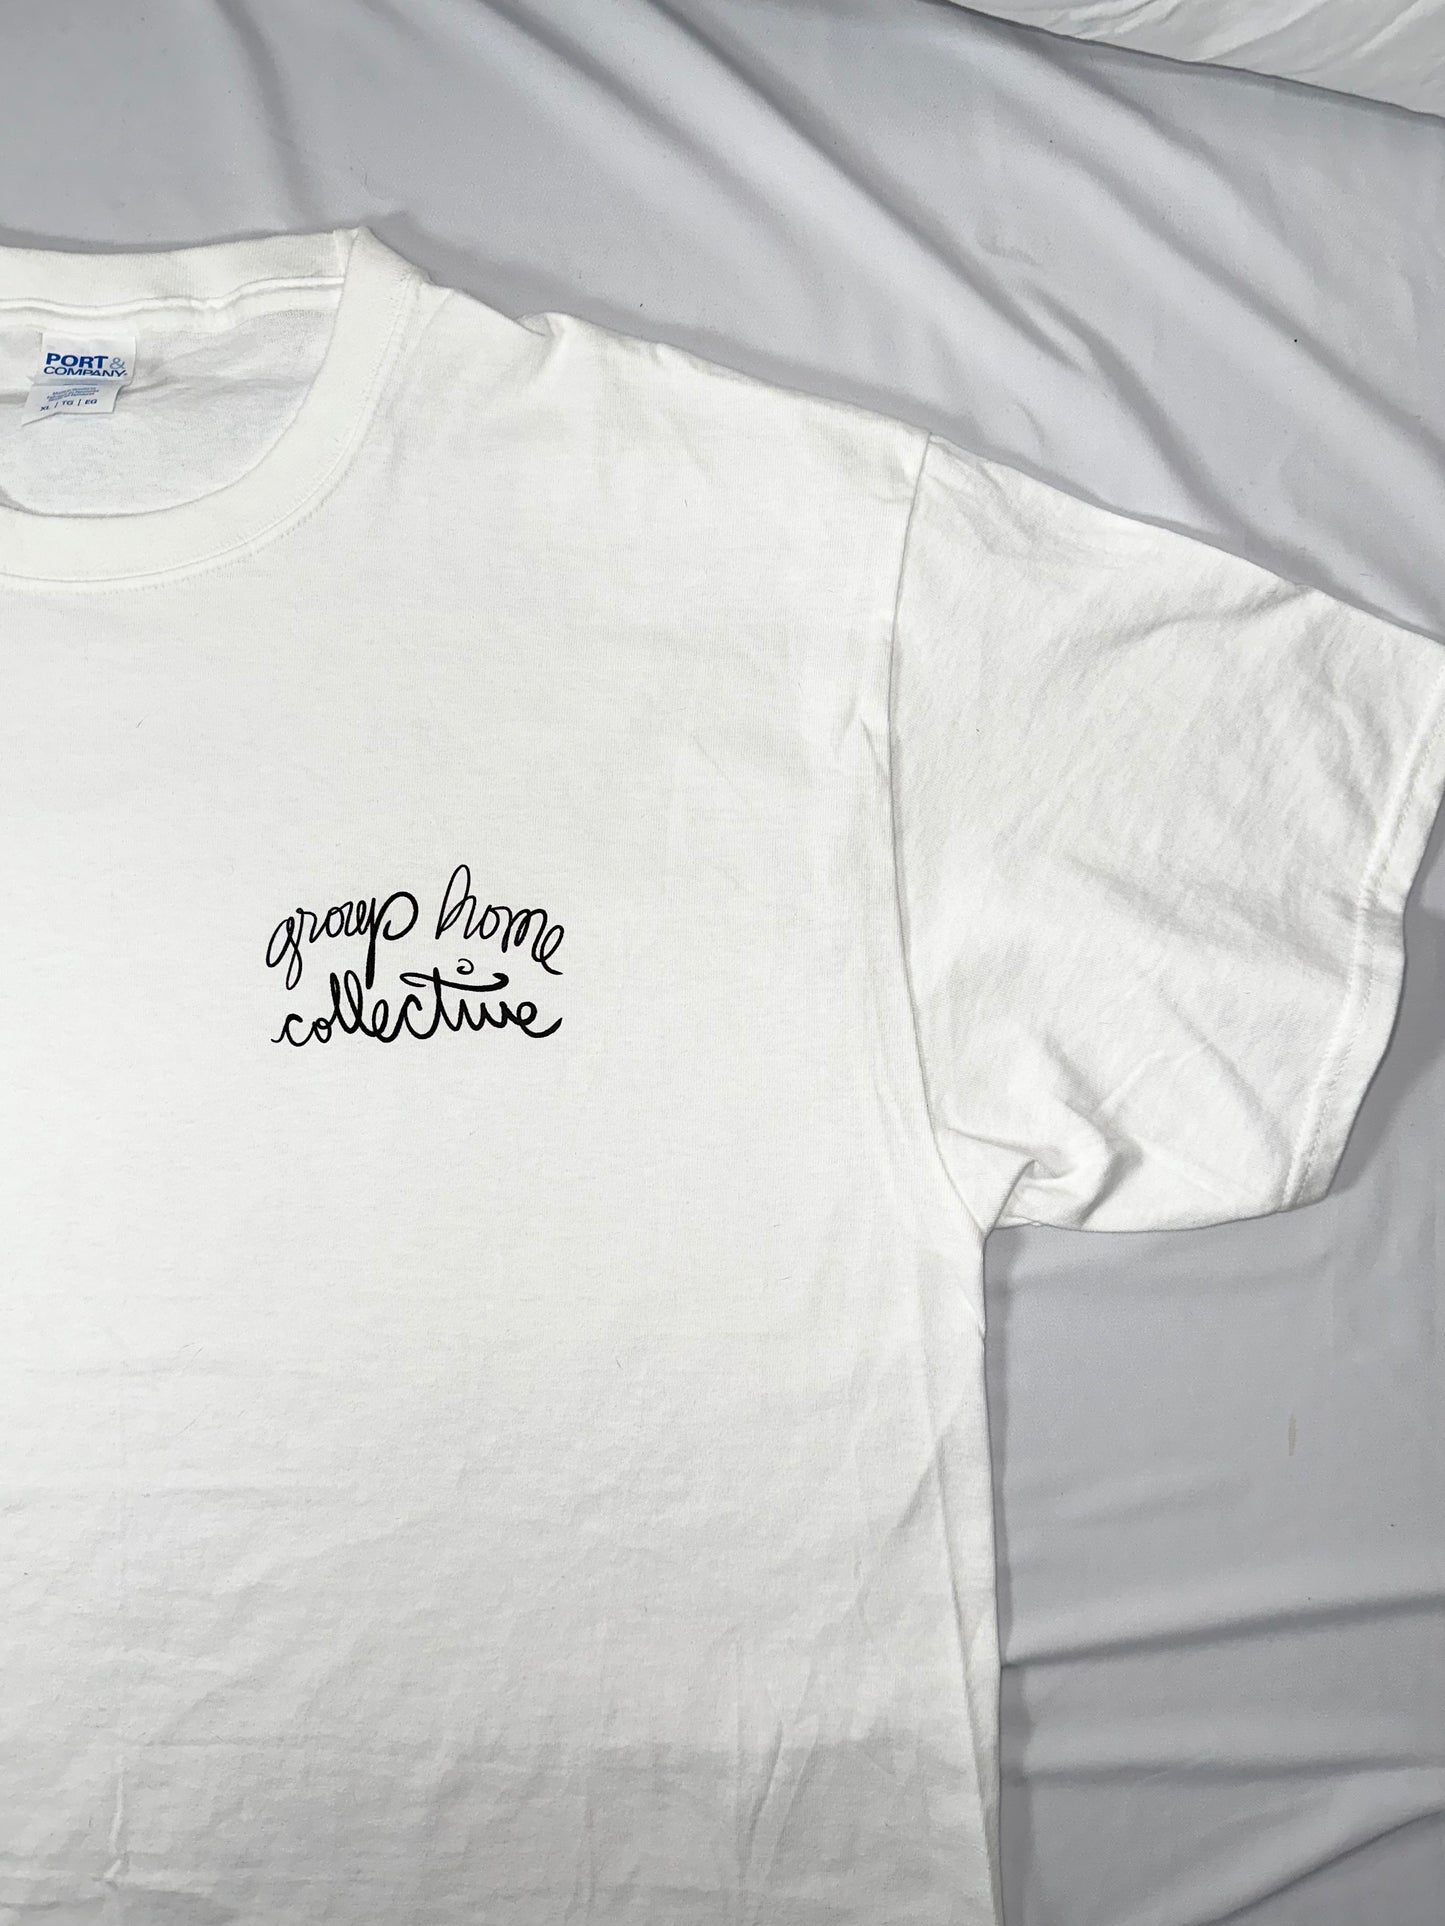 Quick Script small logo short sleeve t-shirt white/black